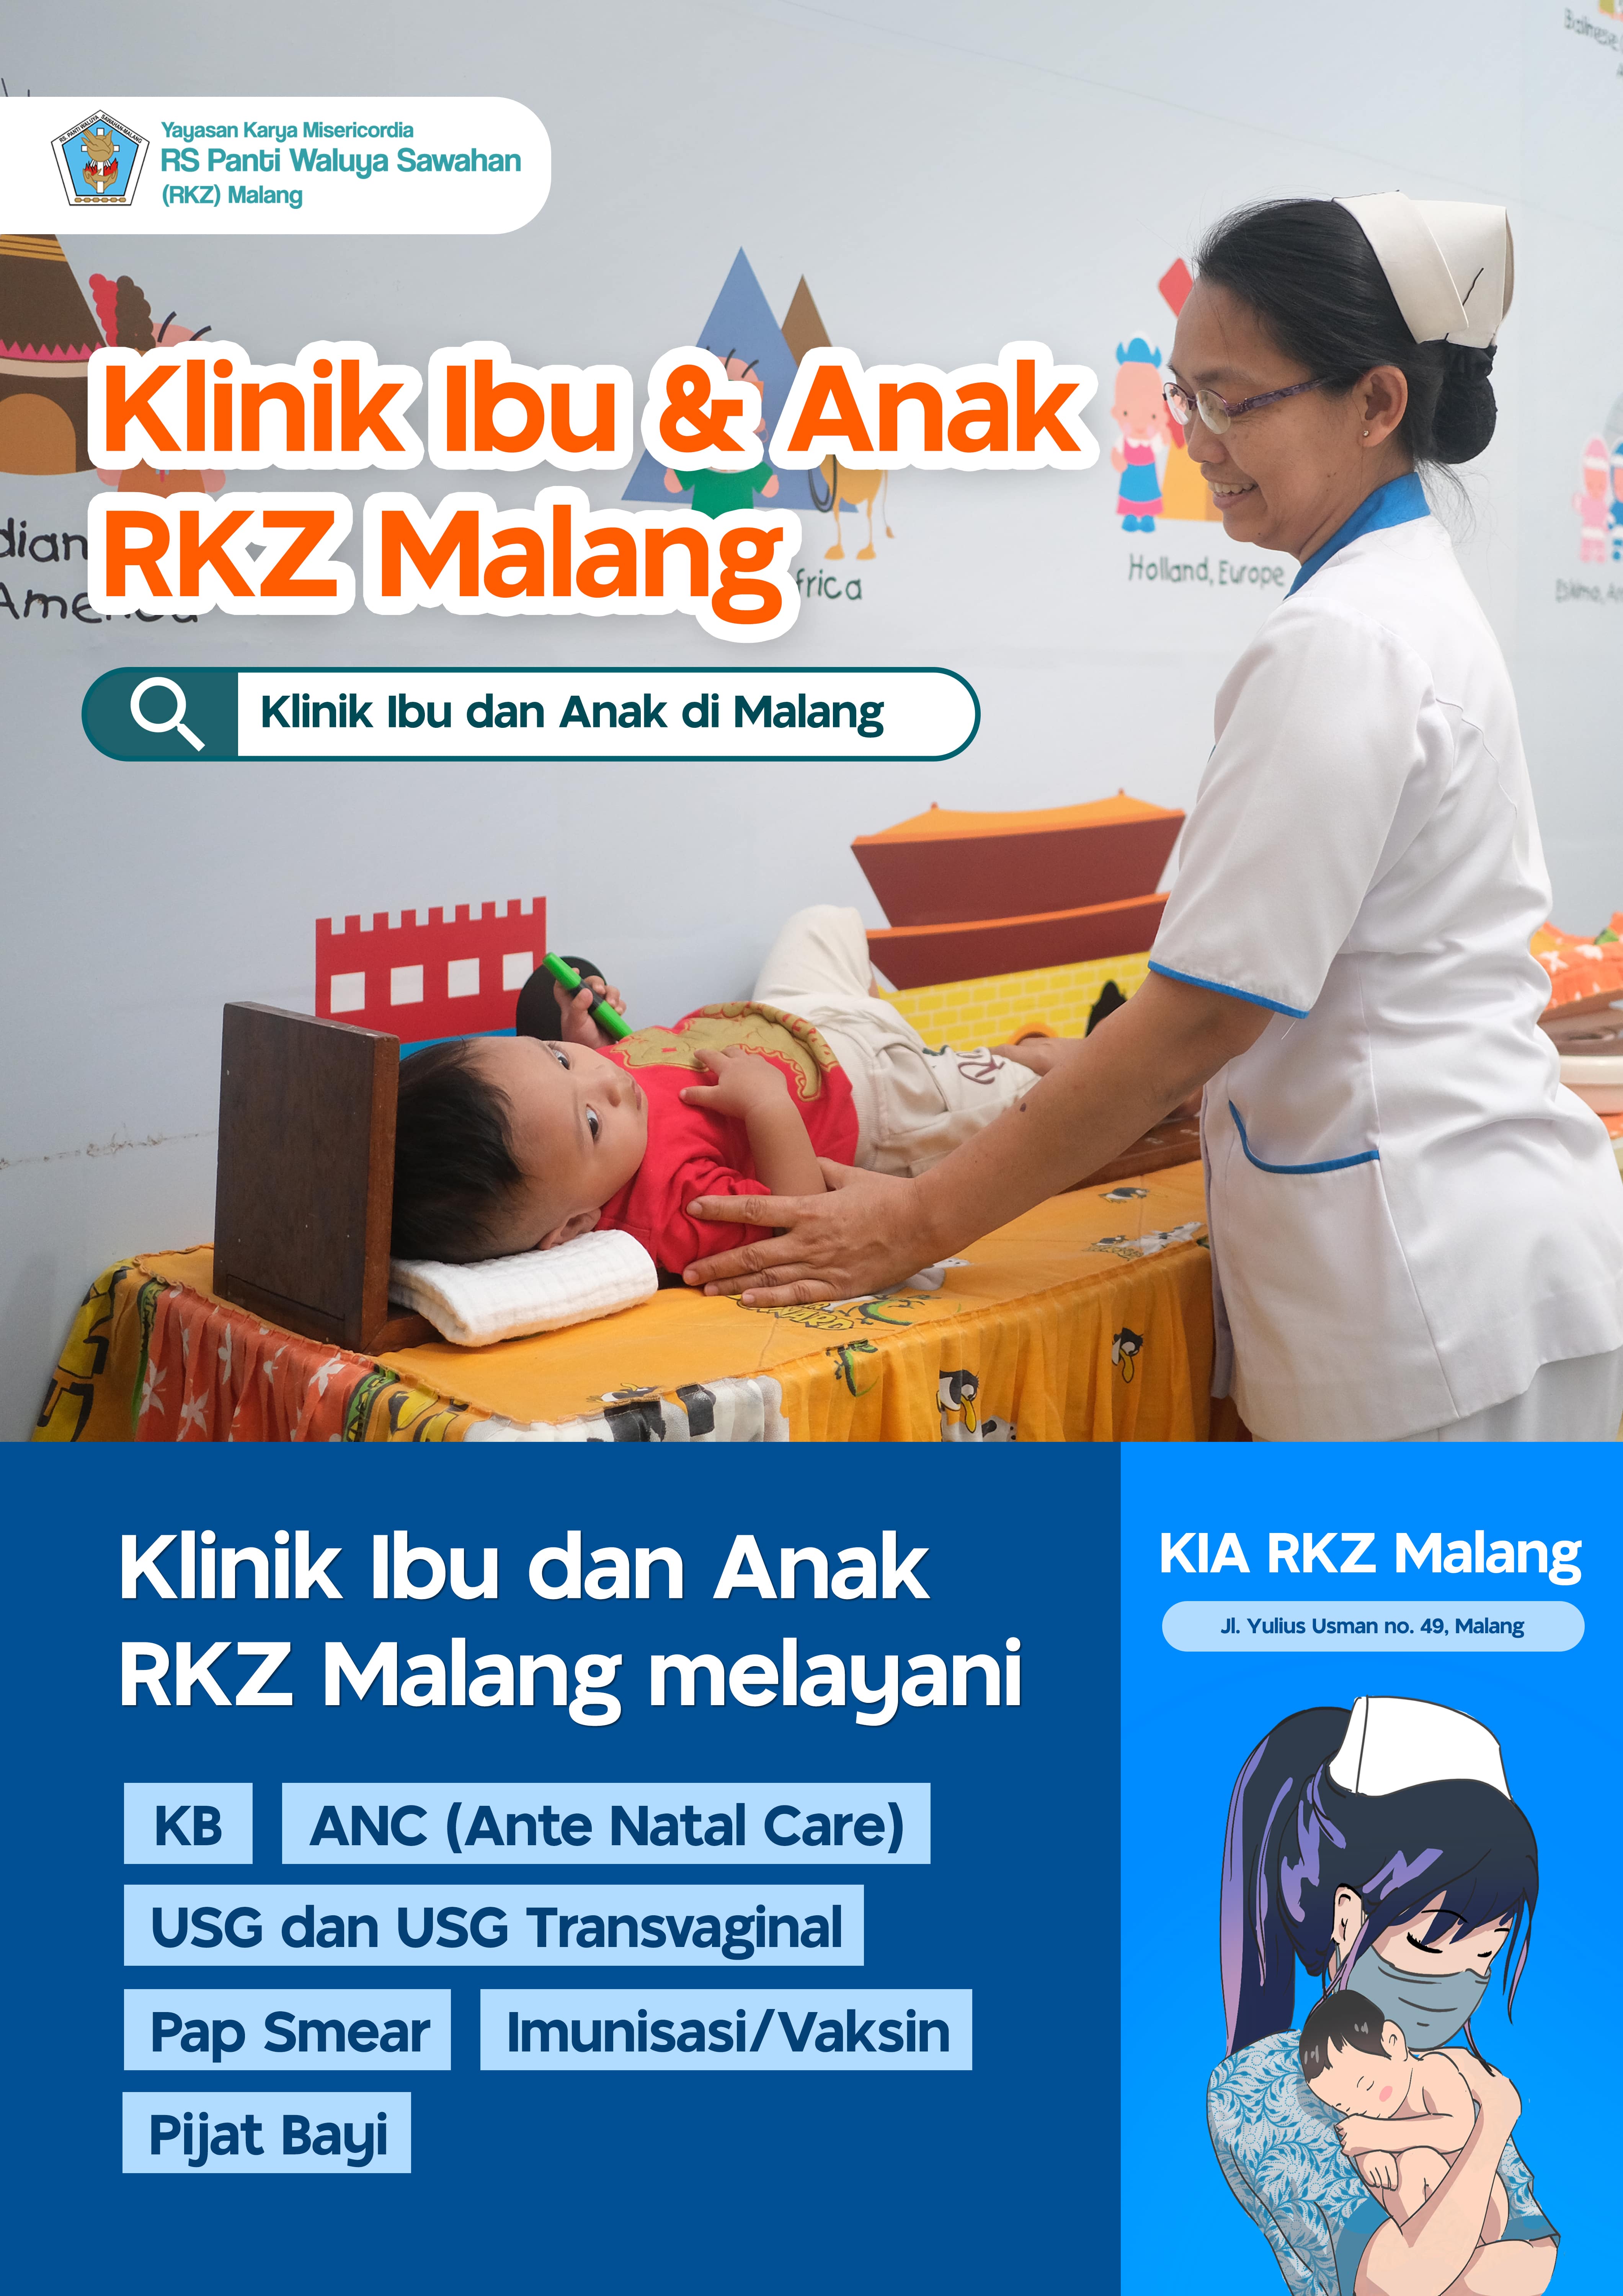 Klinik Ibu dan Anak RKZ Malang